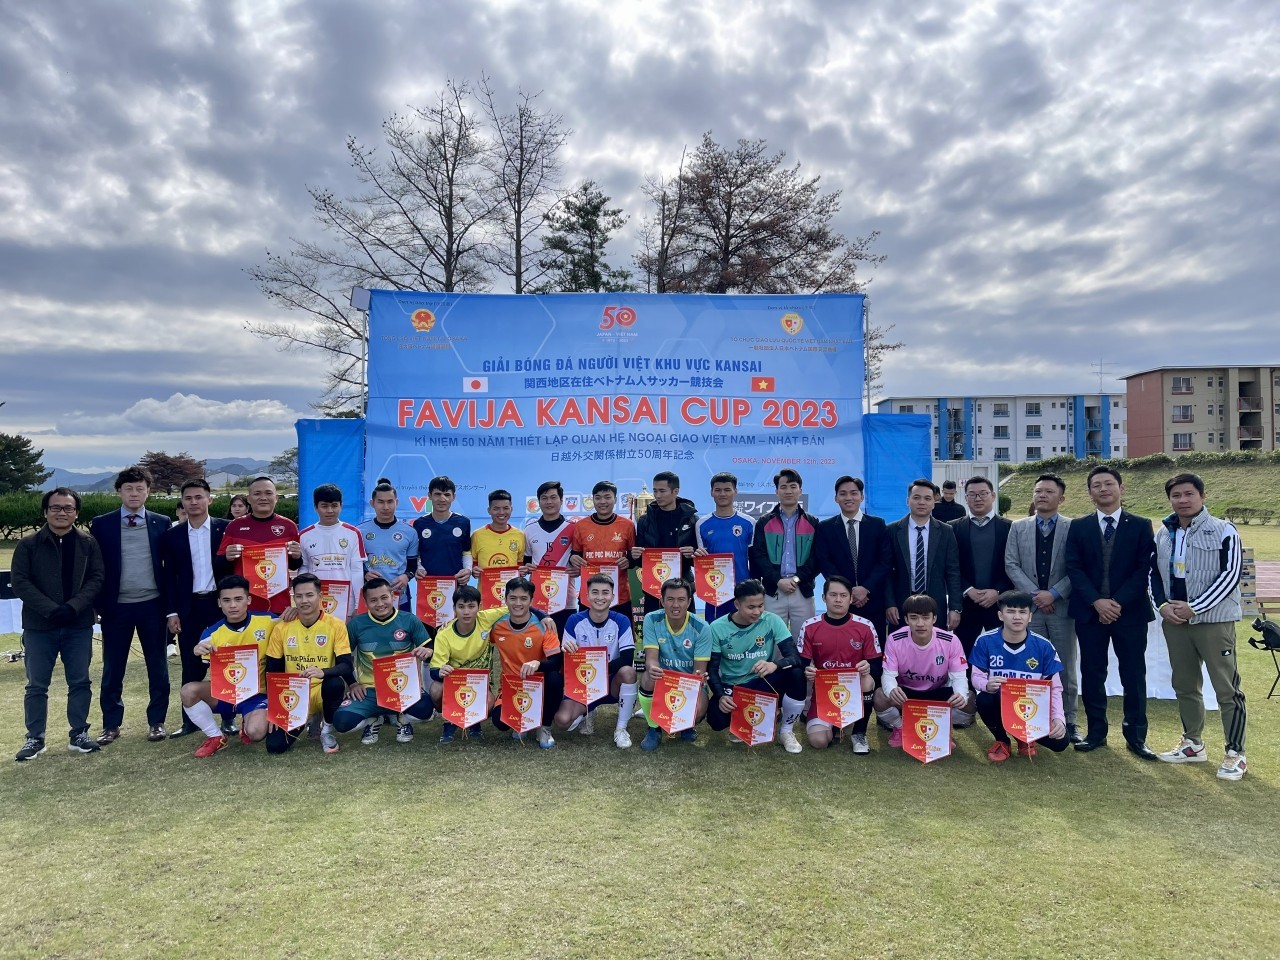 Exciting Vietnamese Football Tournament in Kansai Region of Japan